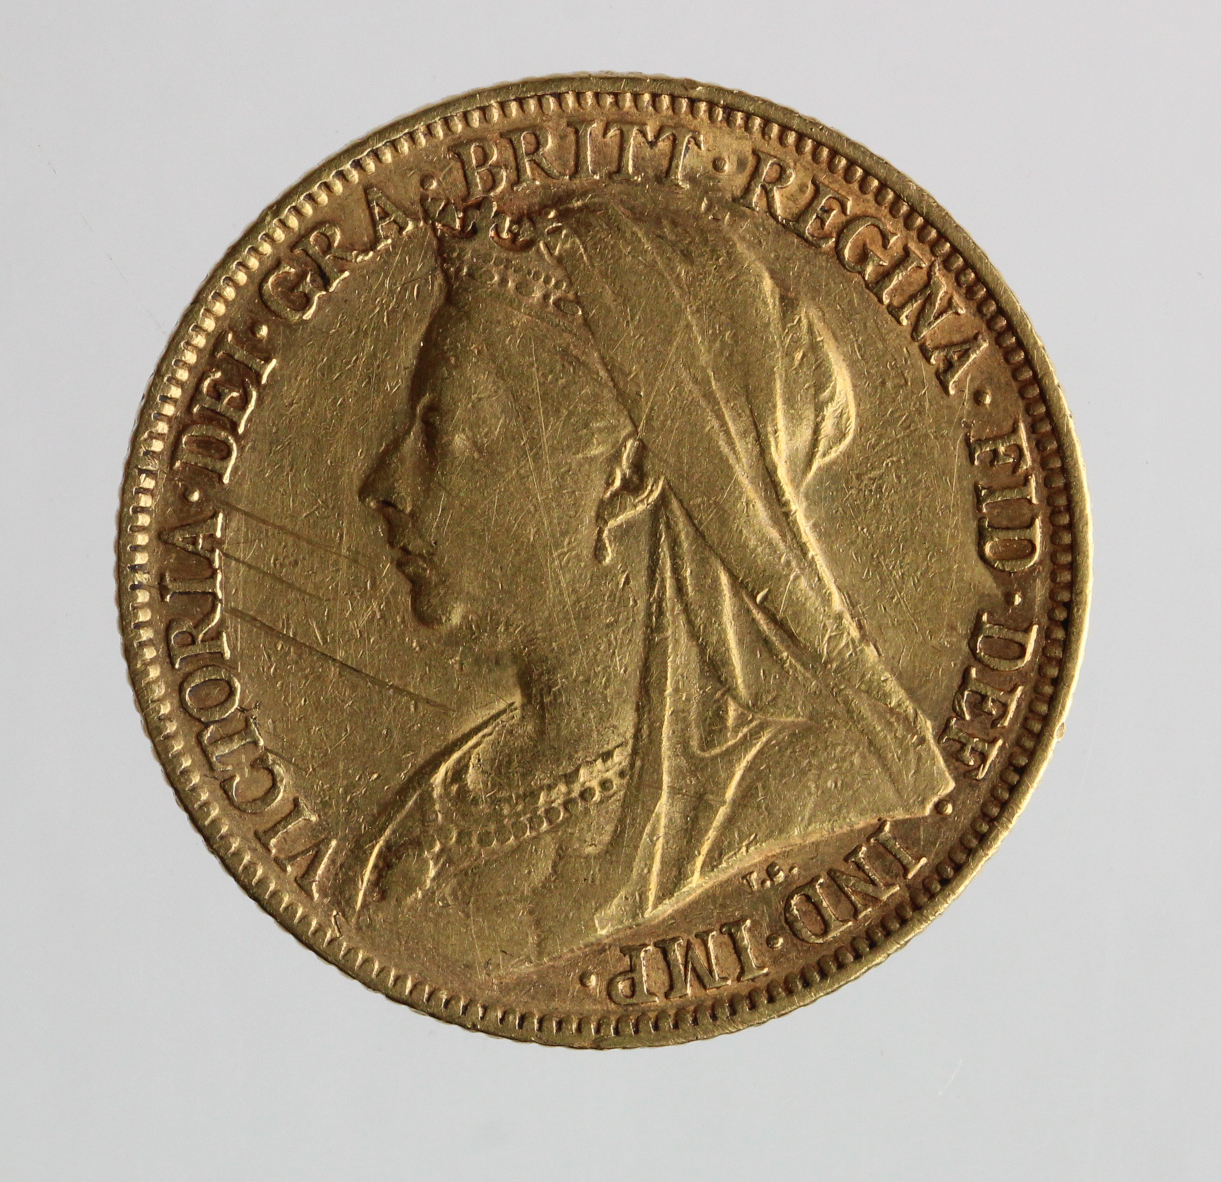 Sovereign 1899M, Melbourn Mint, Australia, VF, scratches.